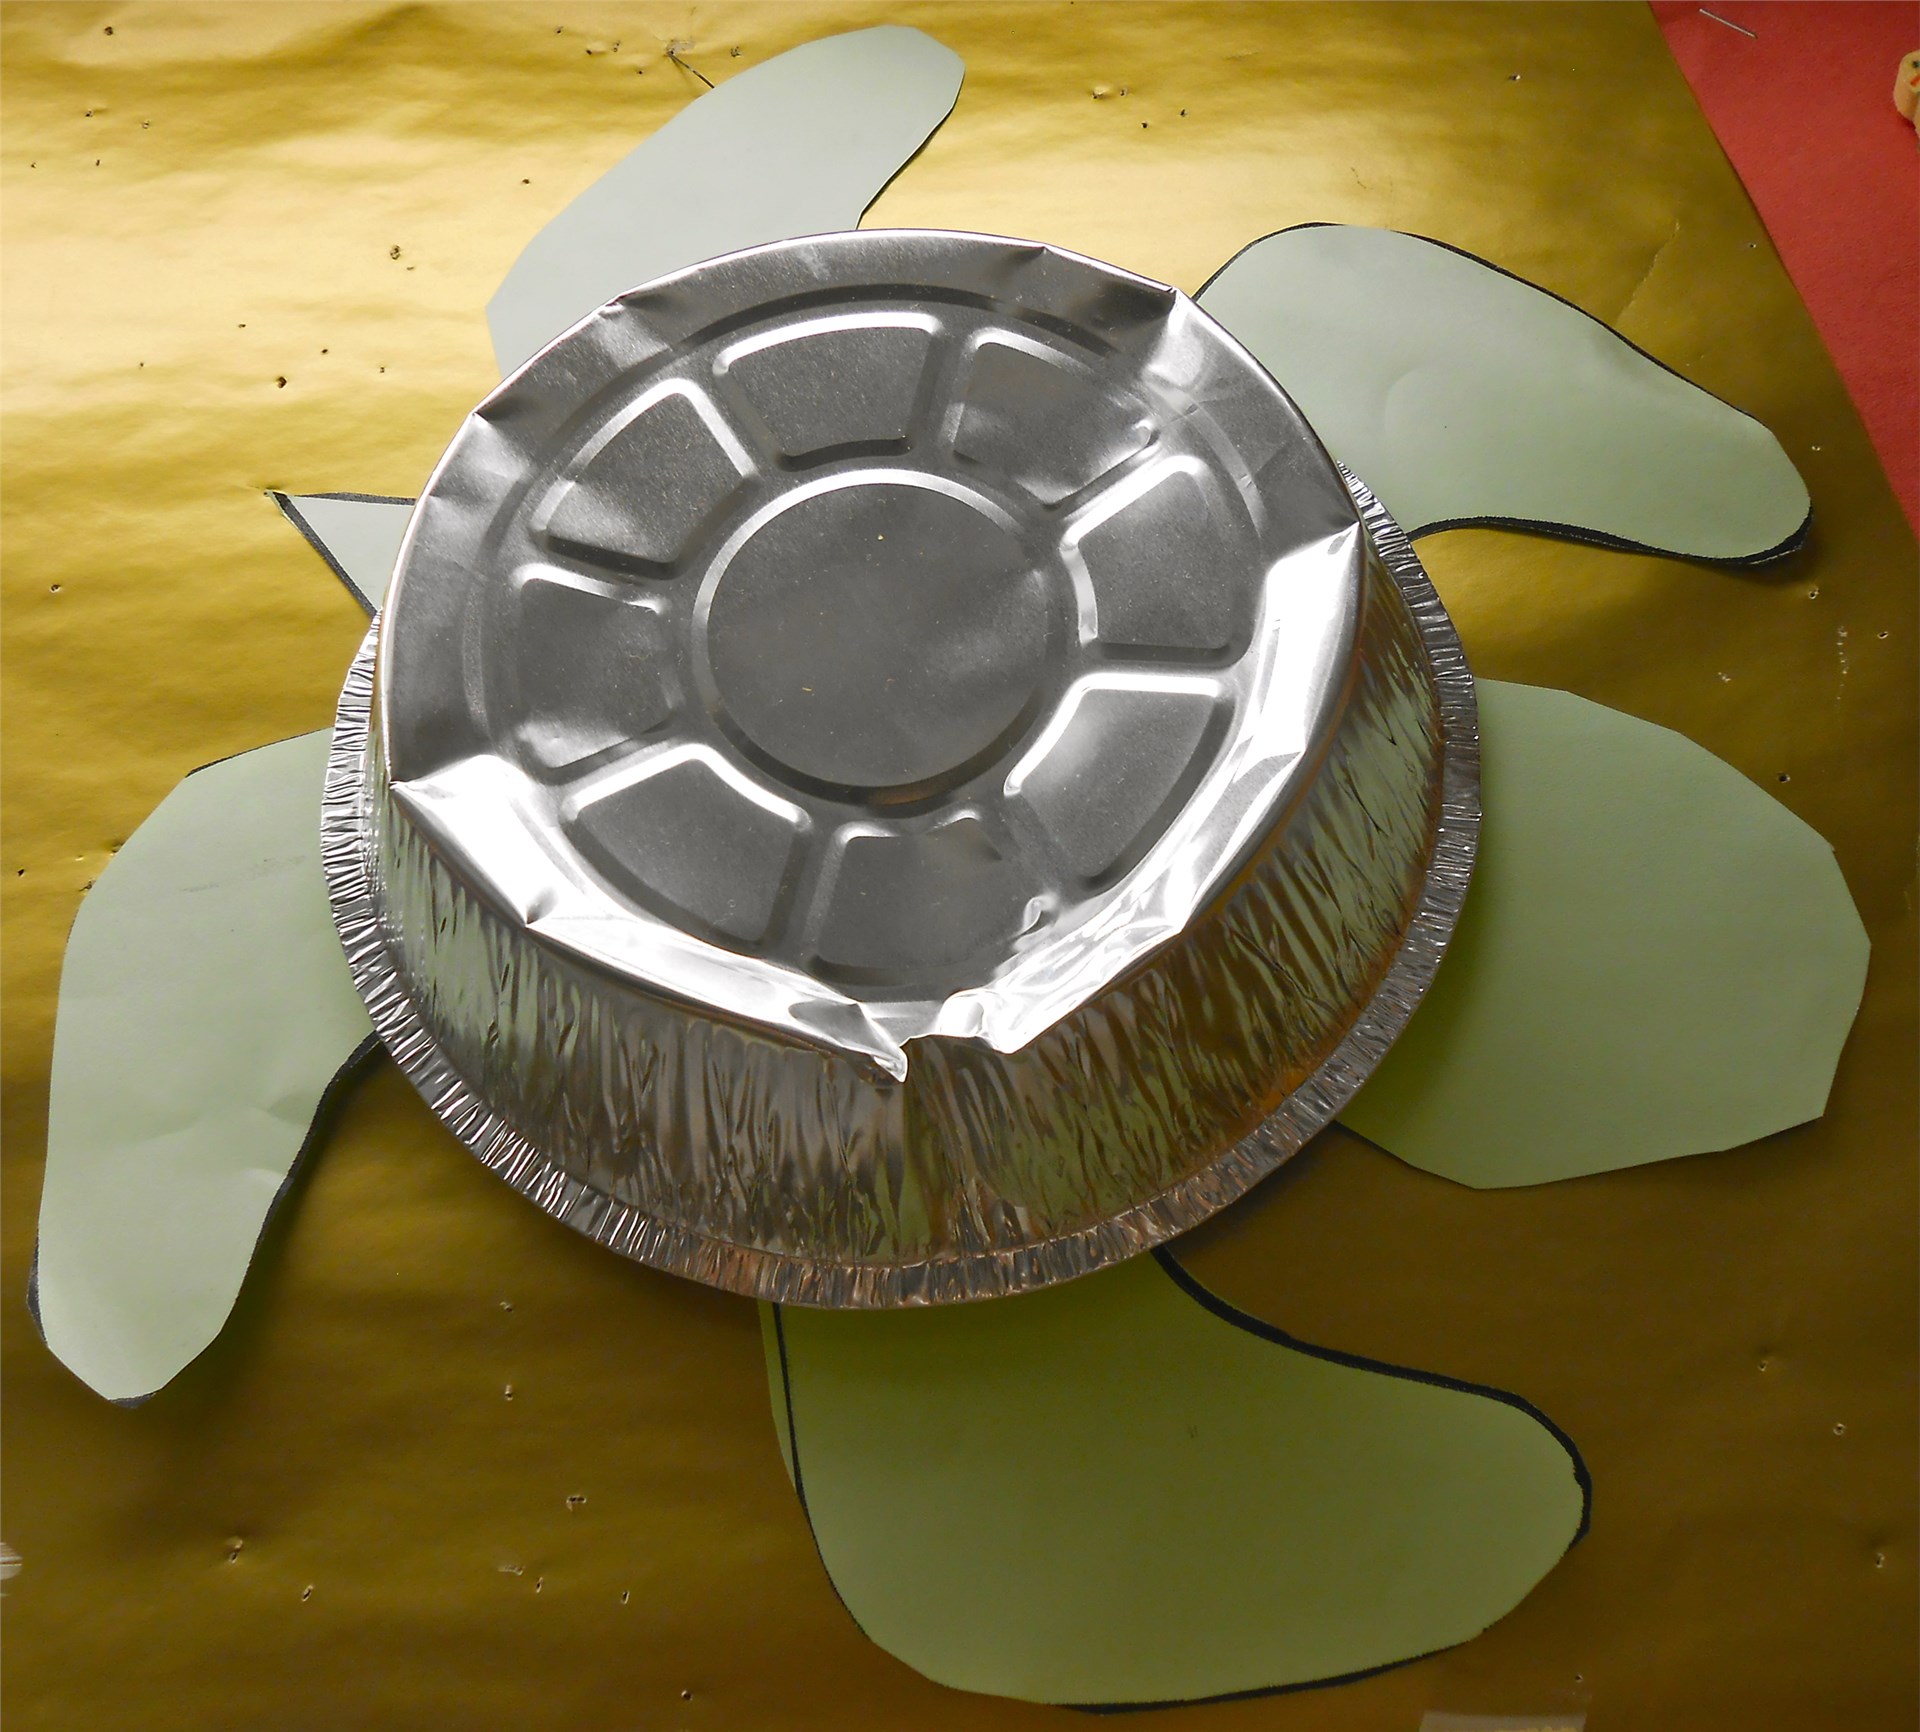 K-1 make "turtle shell" rattles